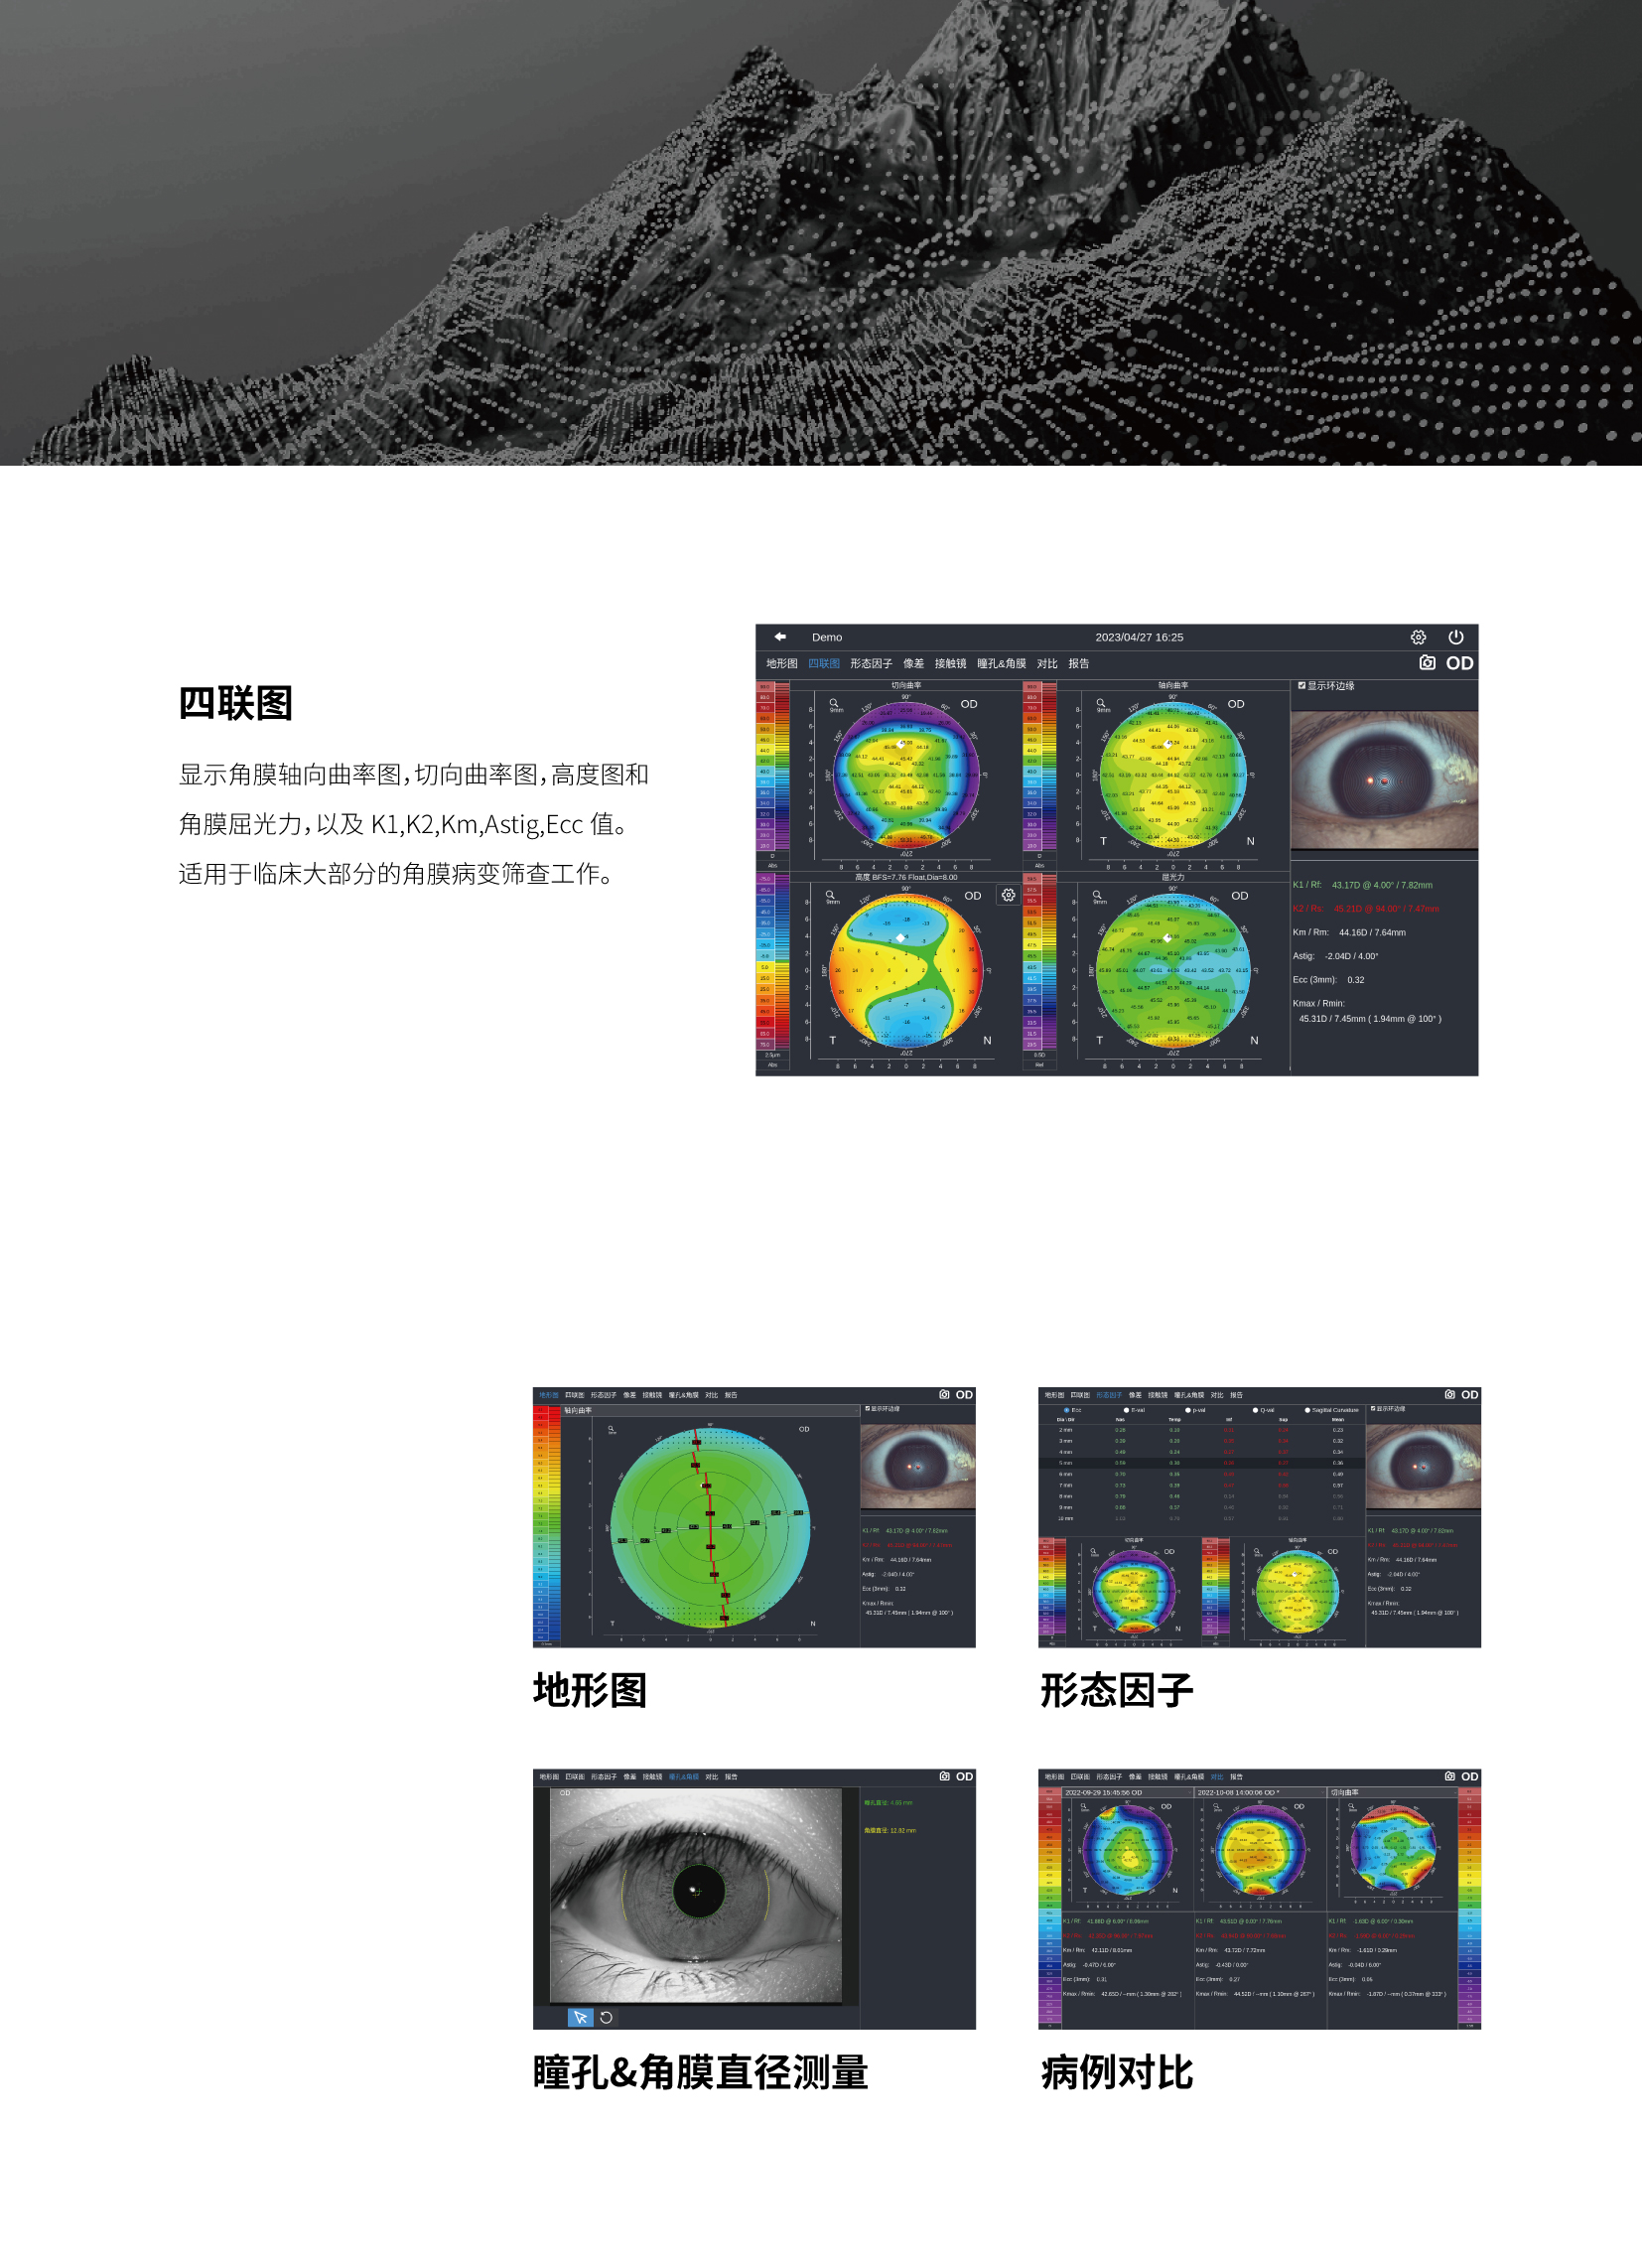 DEA520 干眼和角膜地形图测试仪 20230829-07.jpg